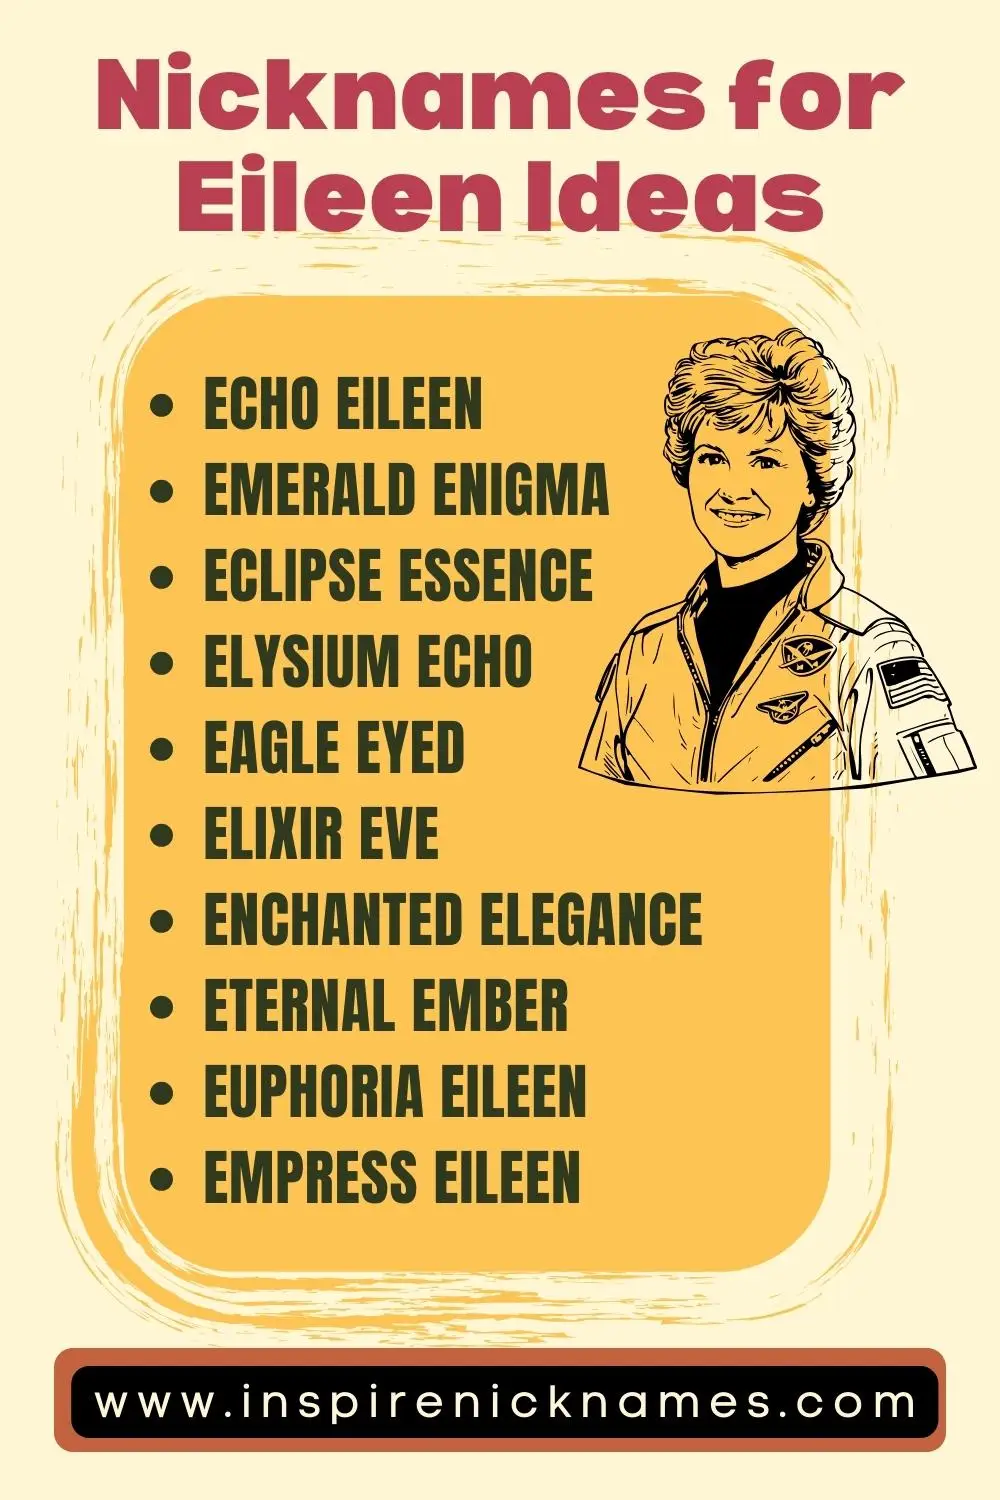 Nicknames for Eileen Ideas list